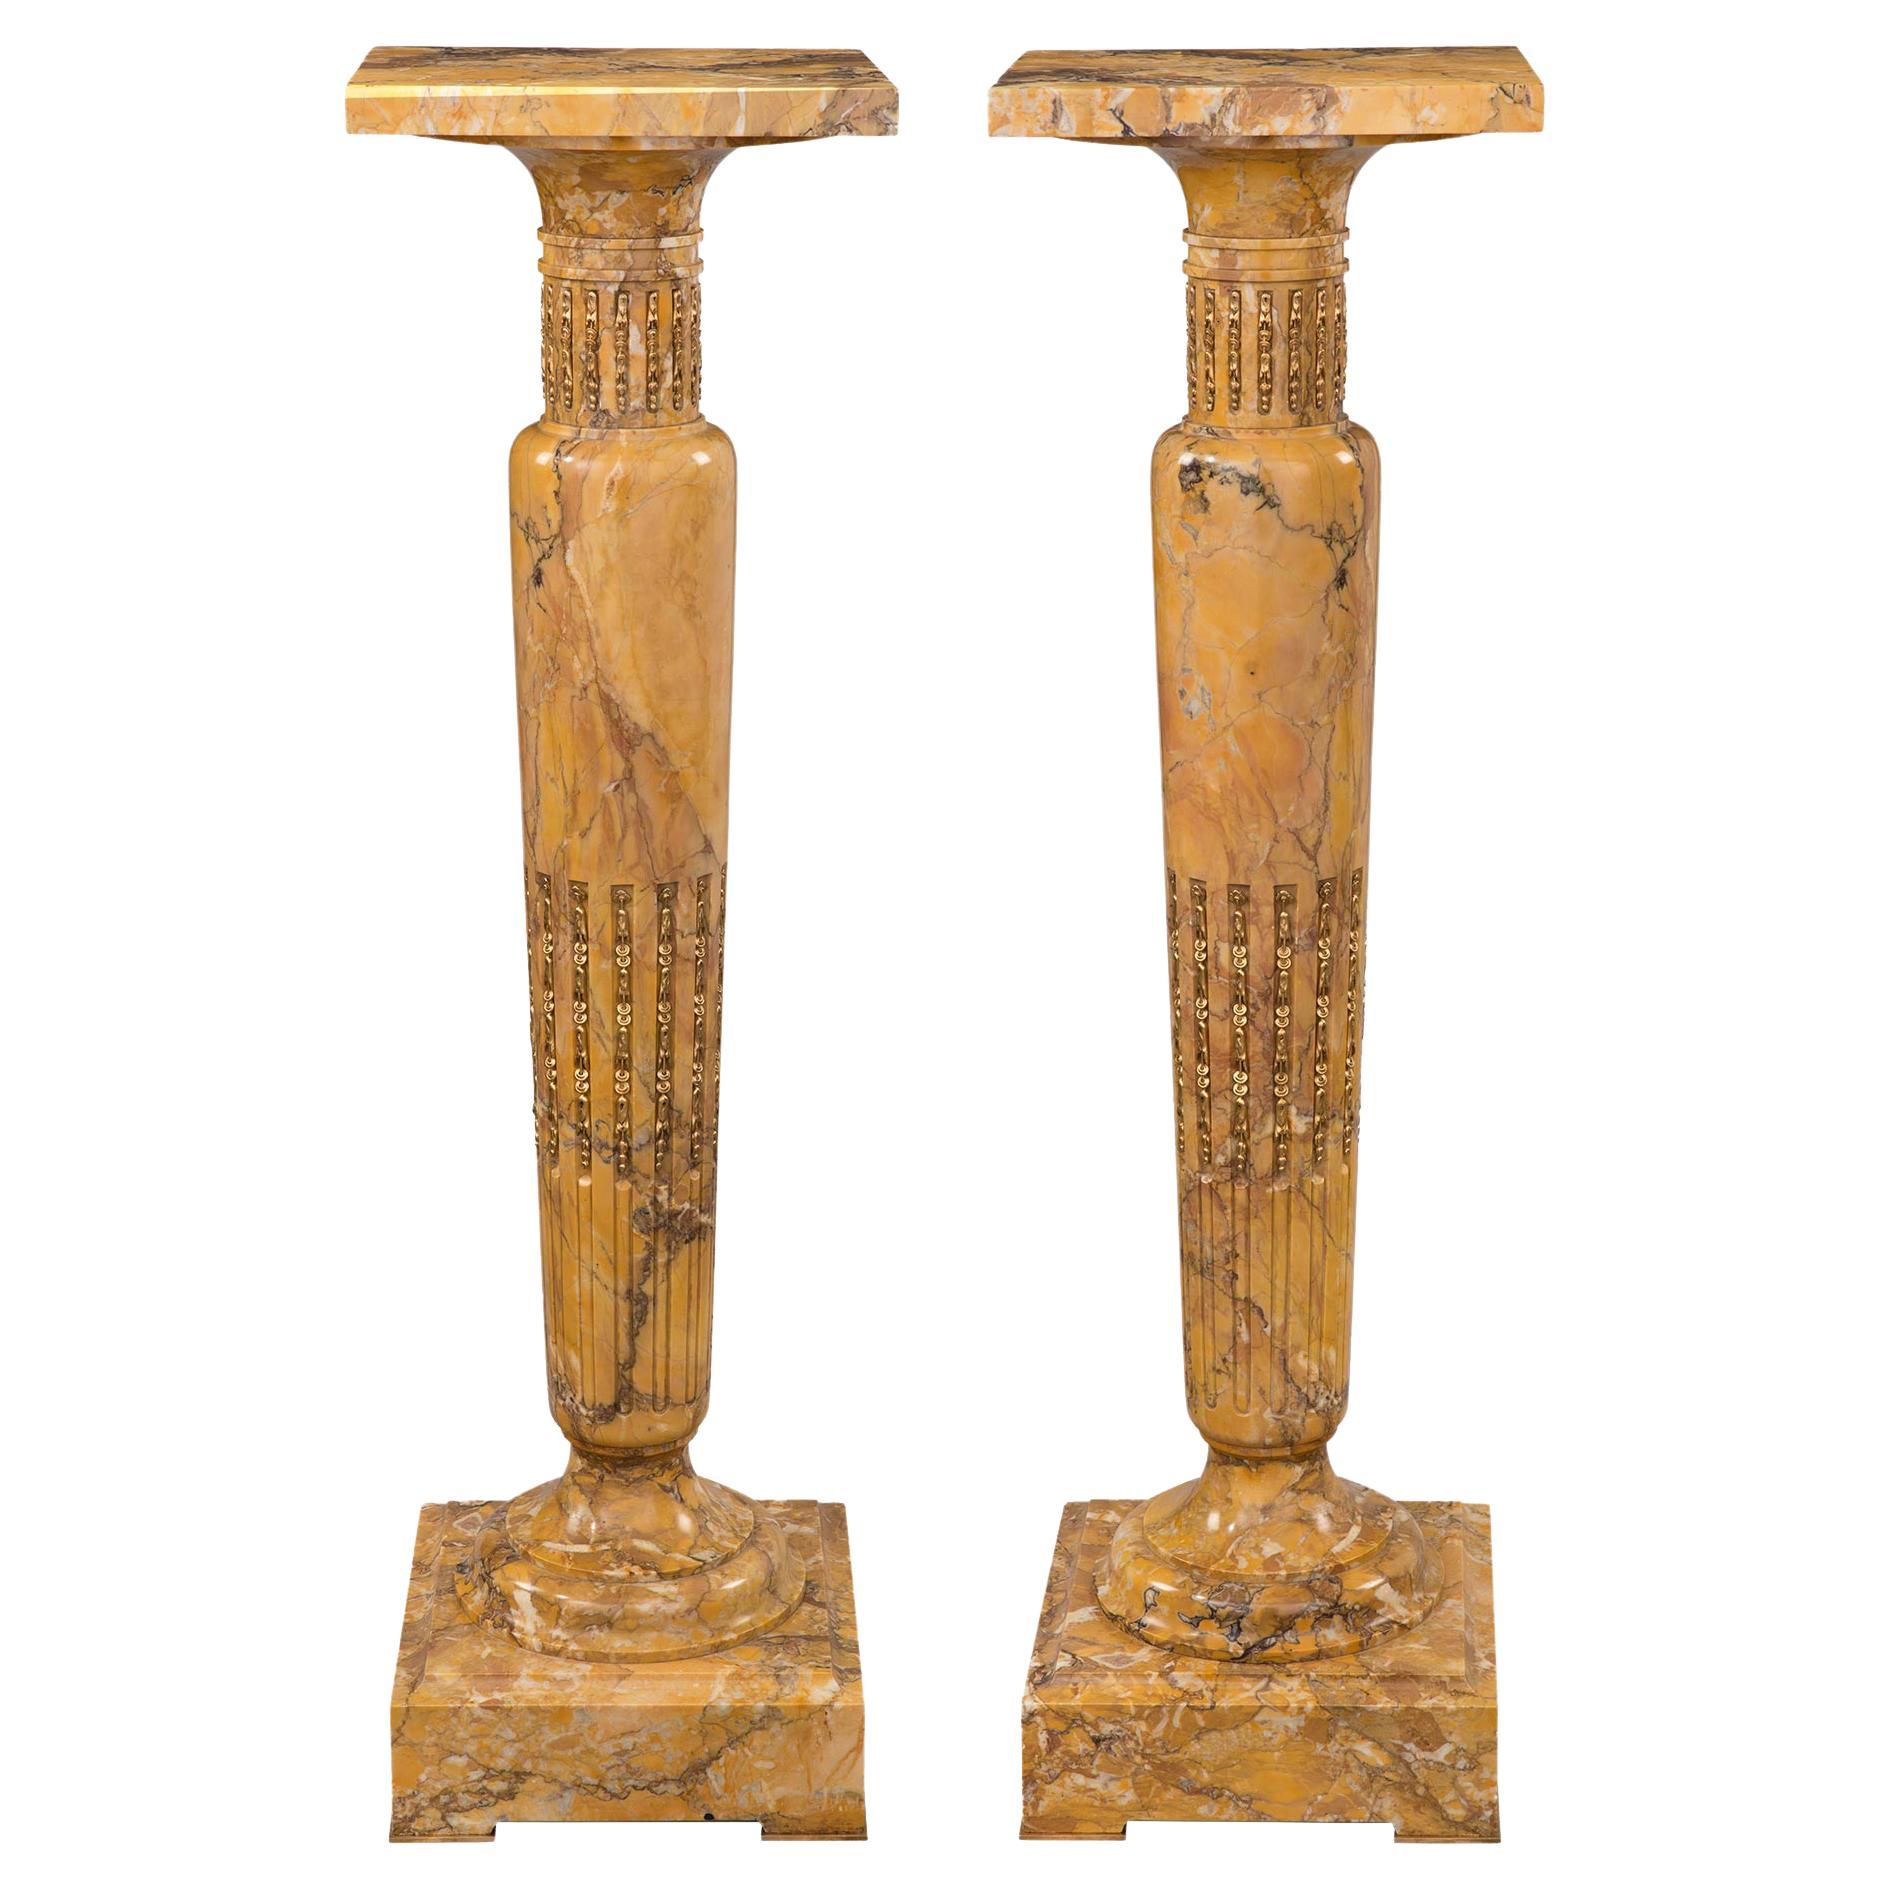 Pair of Italian Mid-19th Century Sienna Marble & Ormolu Mounted Pedestal Columns For Sale